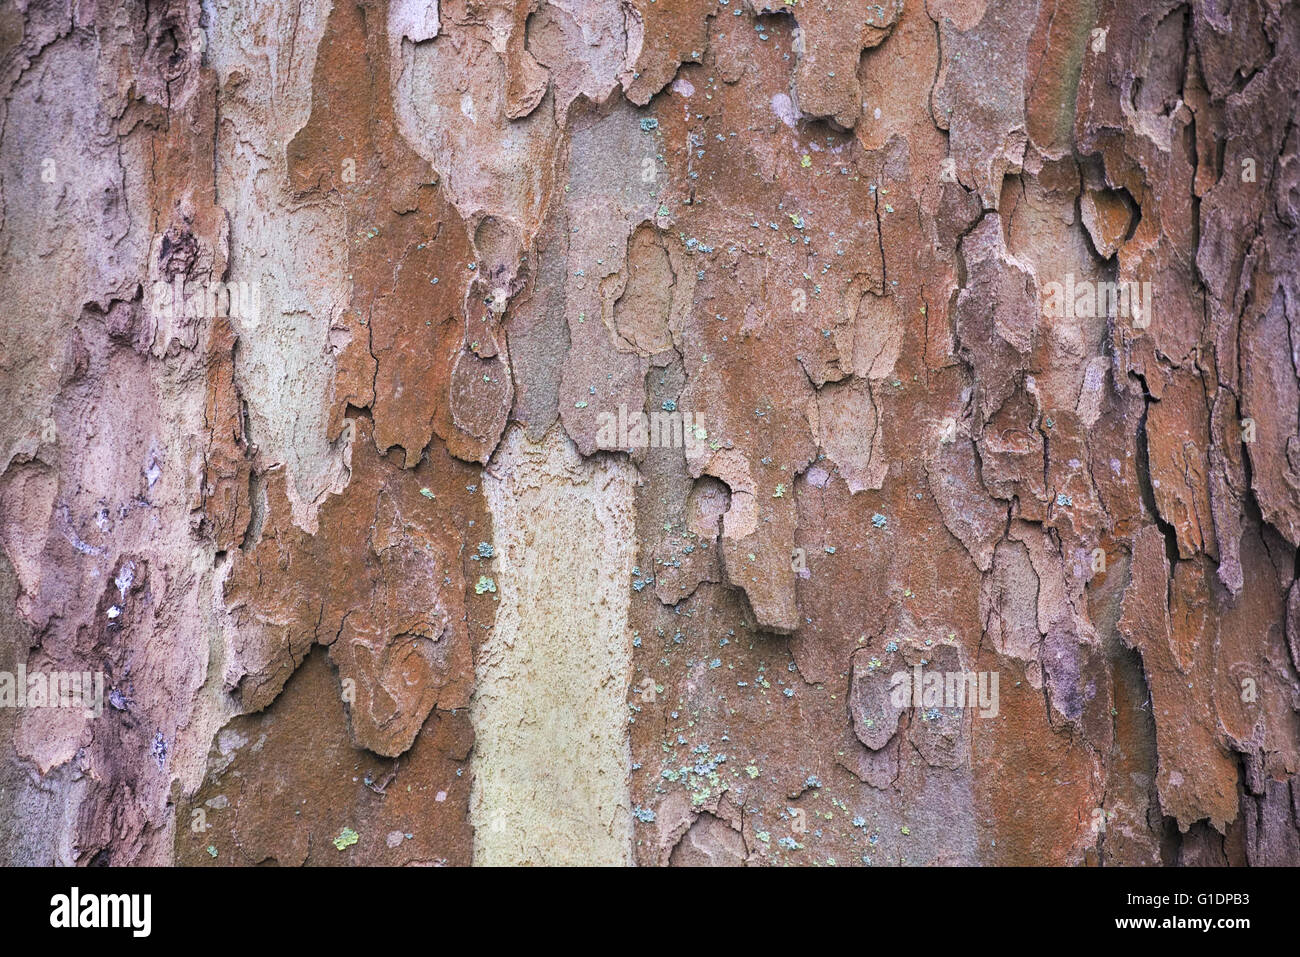 Bark of a london plane (Platanus x acerifolia) resembling an artwork. Stock Photo